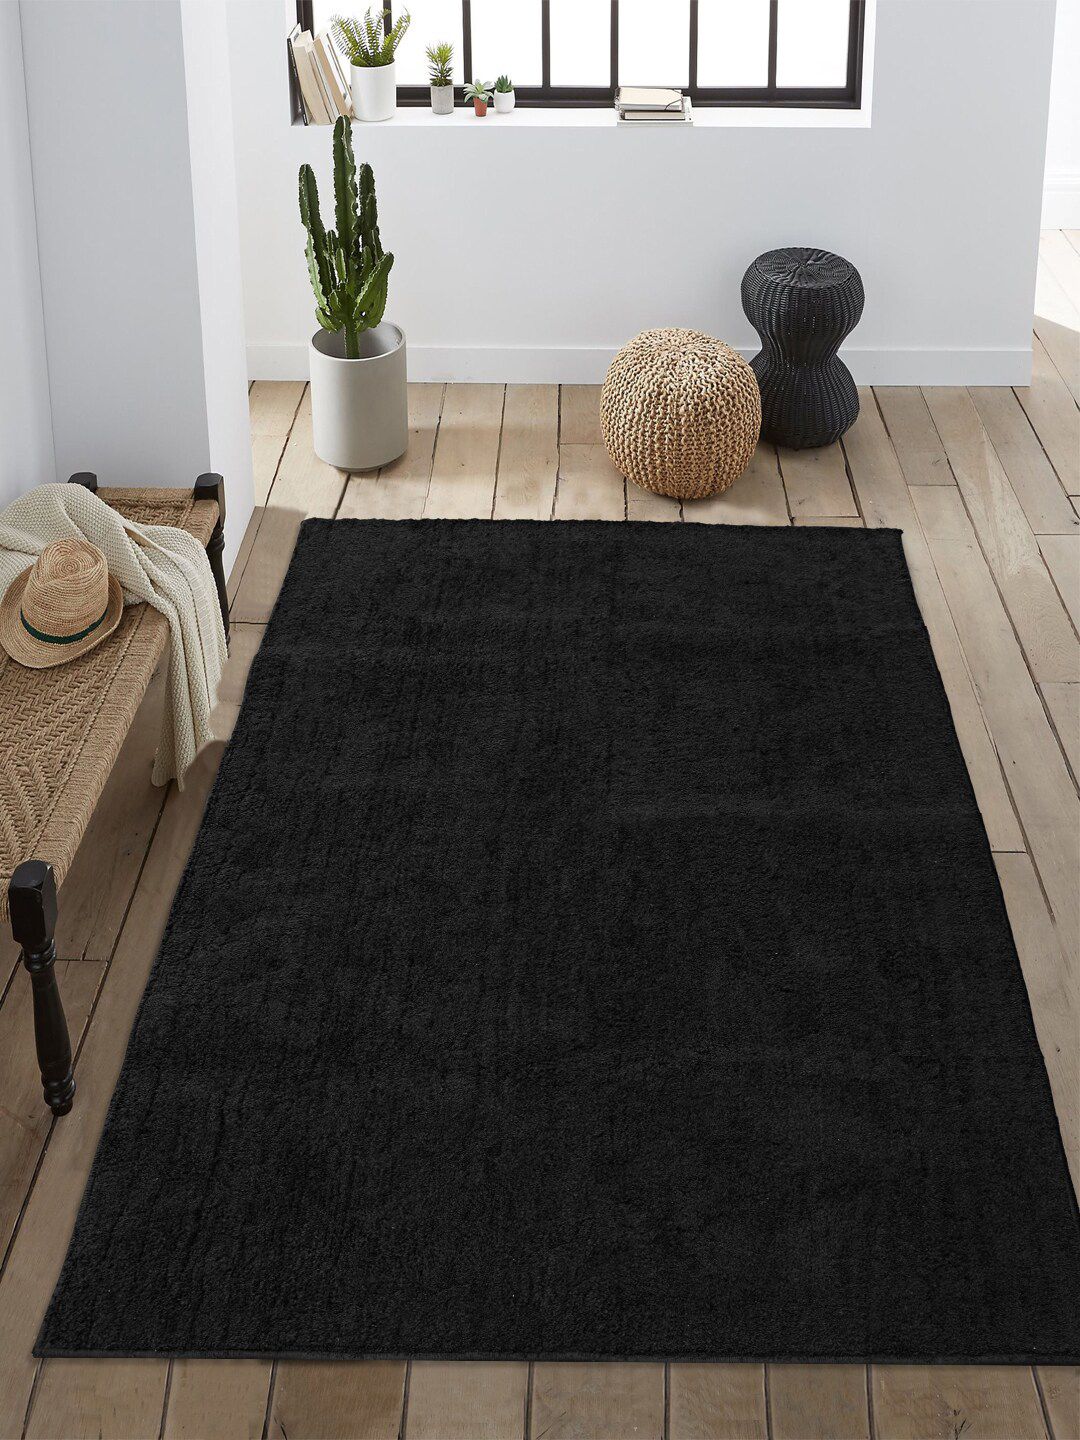 Saral Home Black Solid Anti-Skid Carpet Price in India